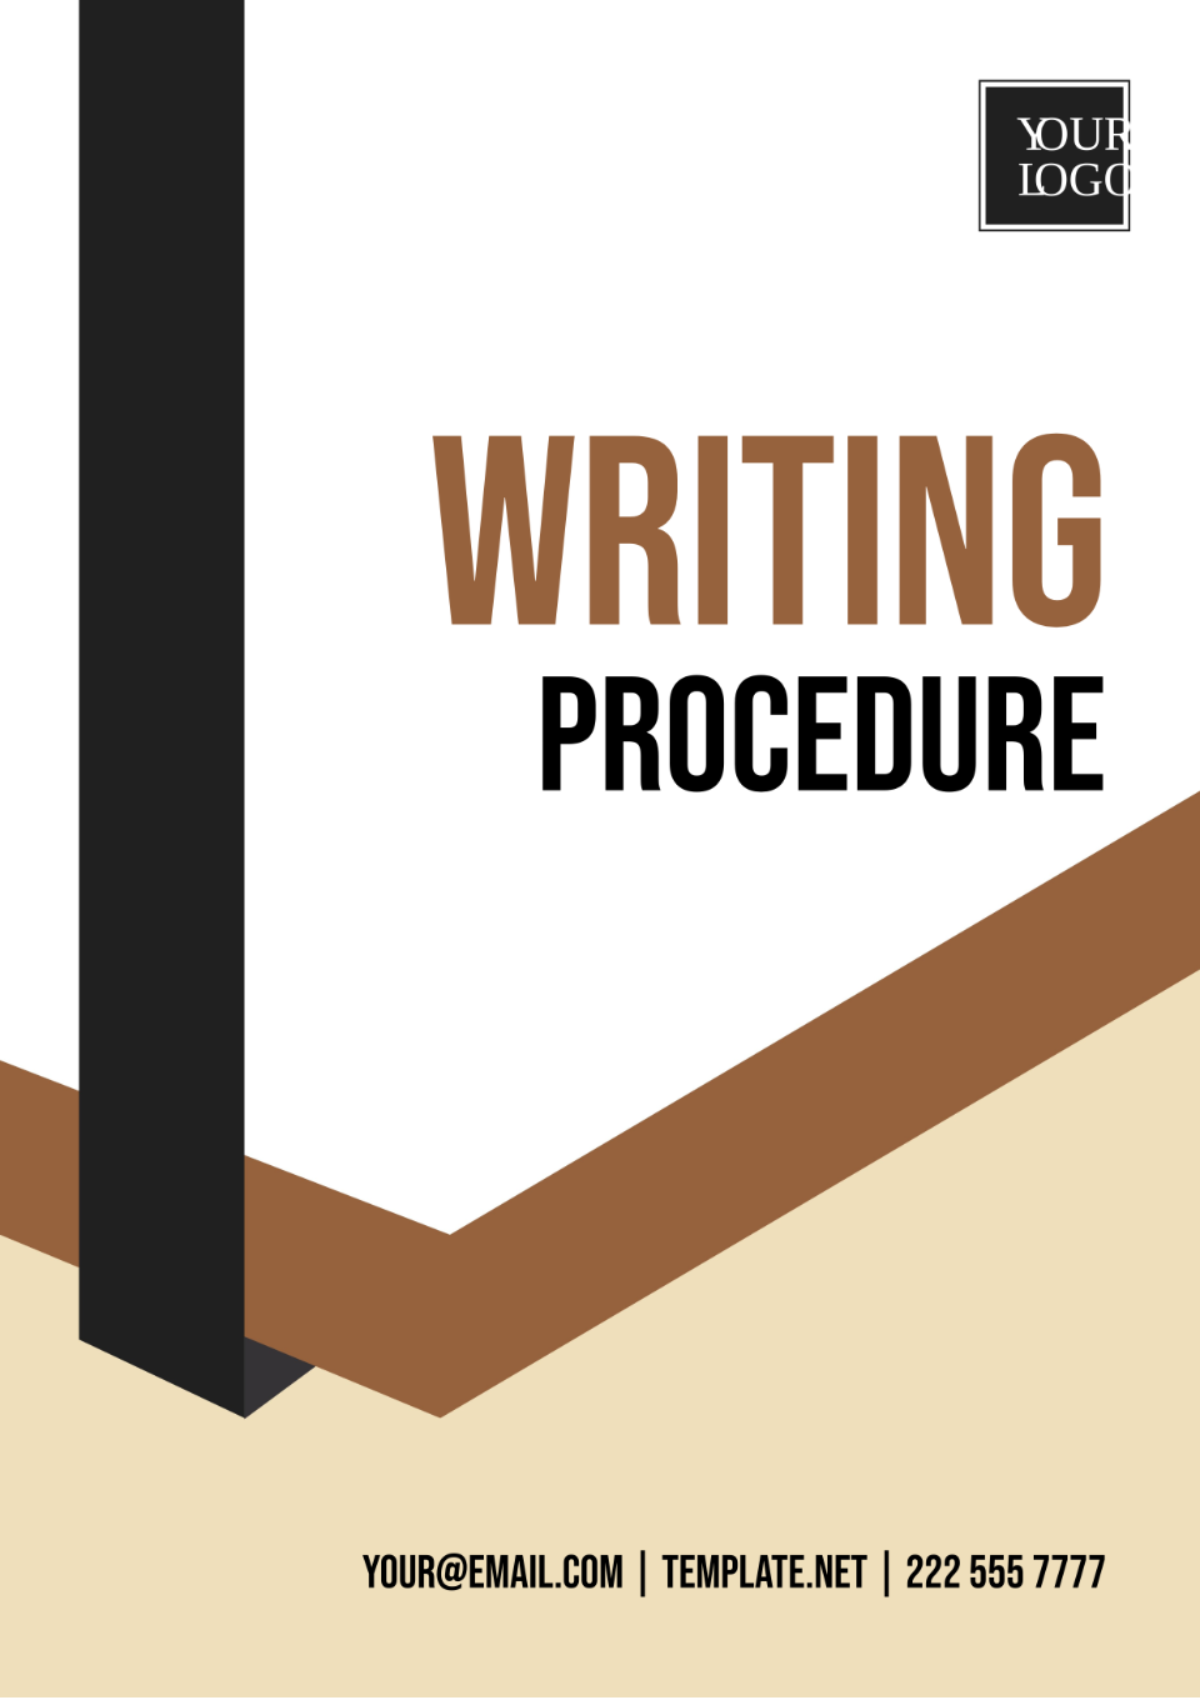 Writing Procedure Template